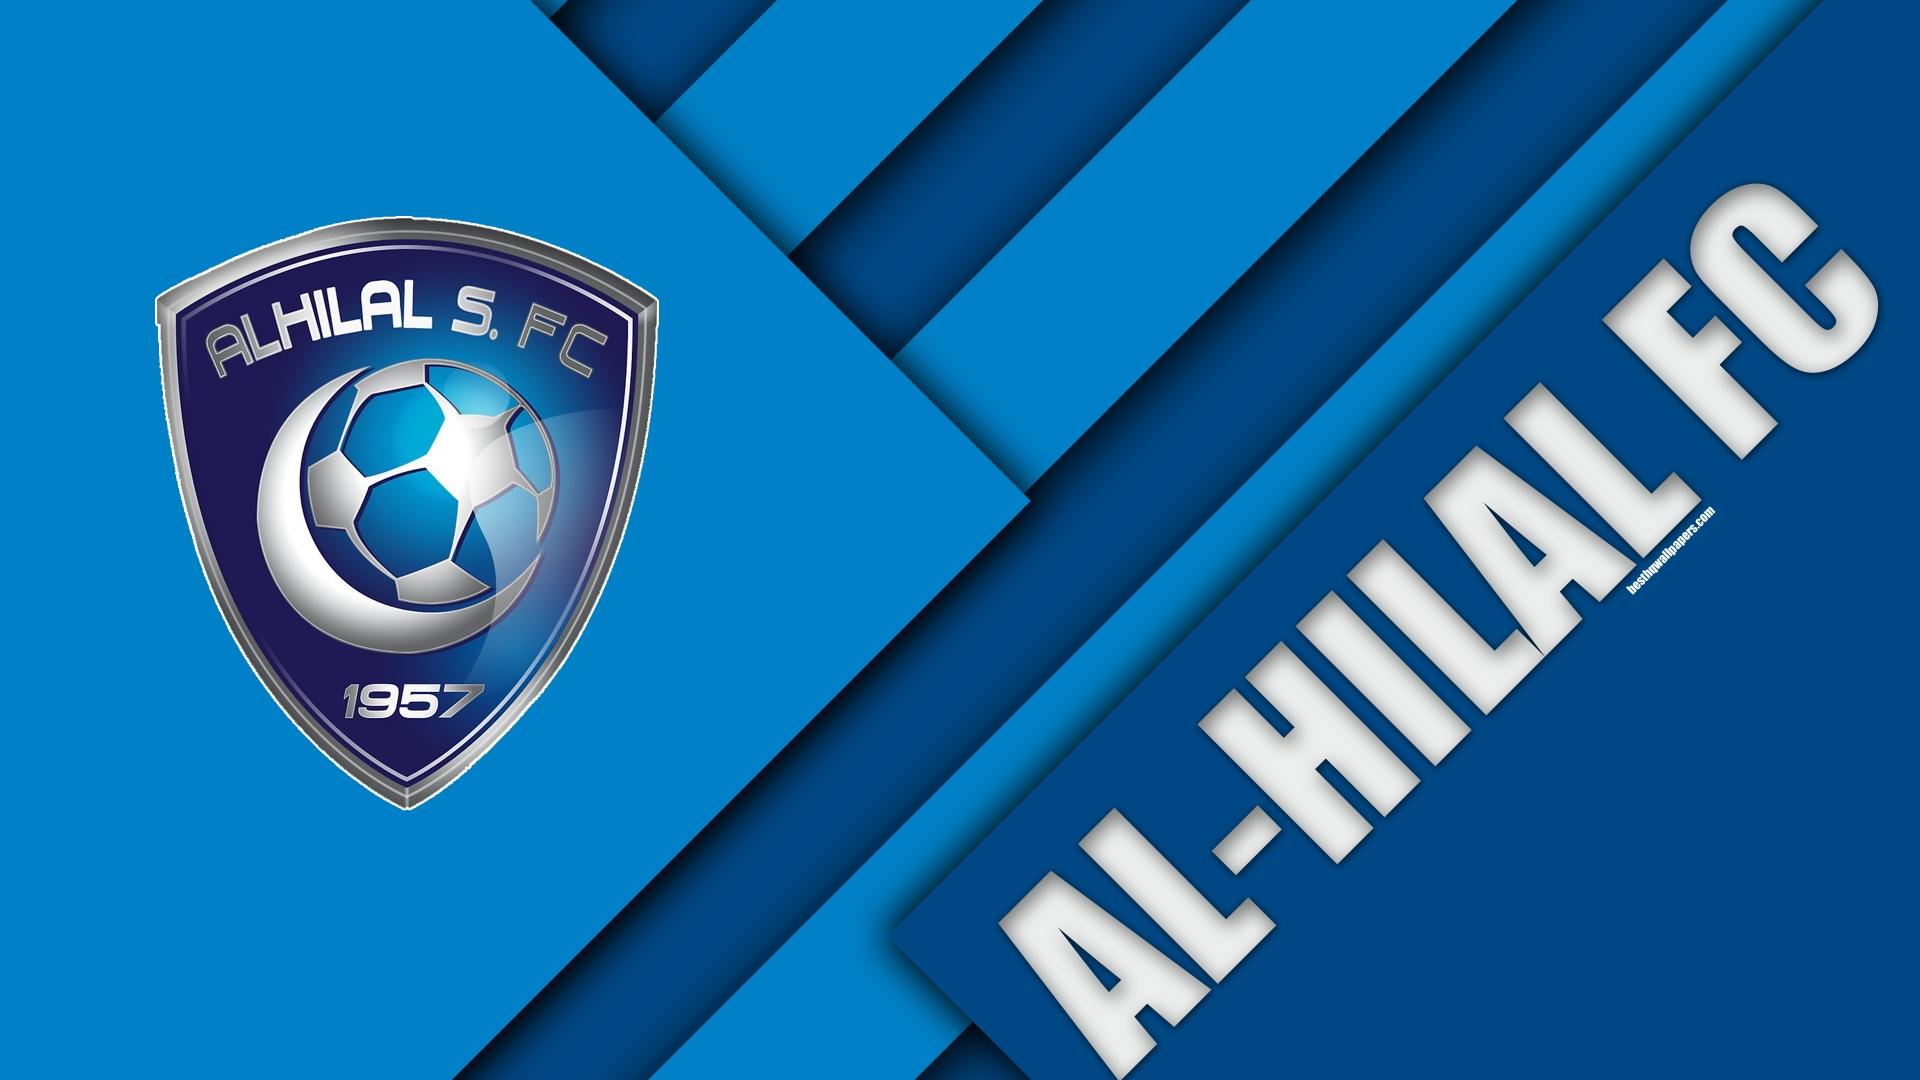 Free download Download wallpaper Al Hilal FC 4k blue